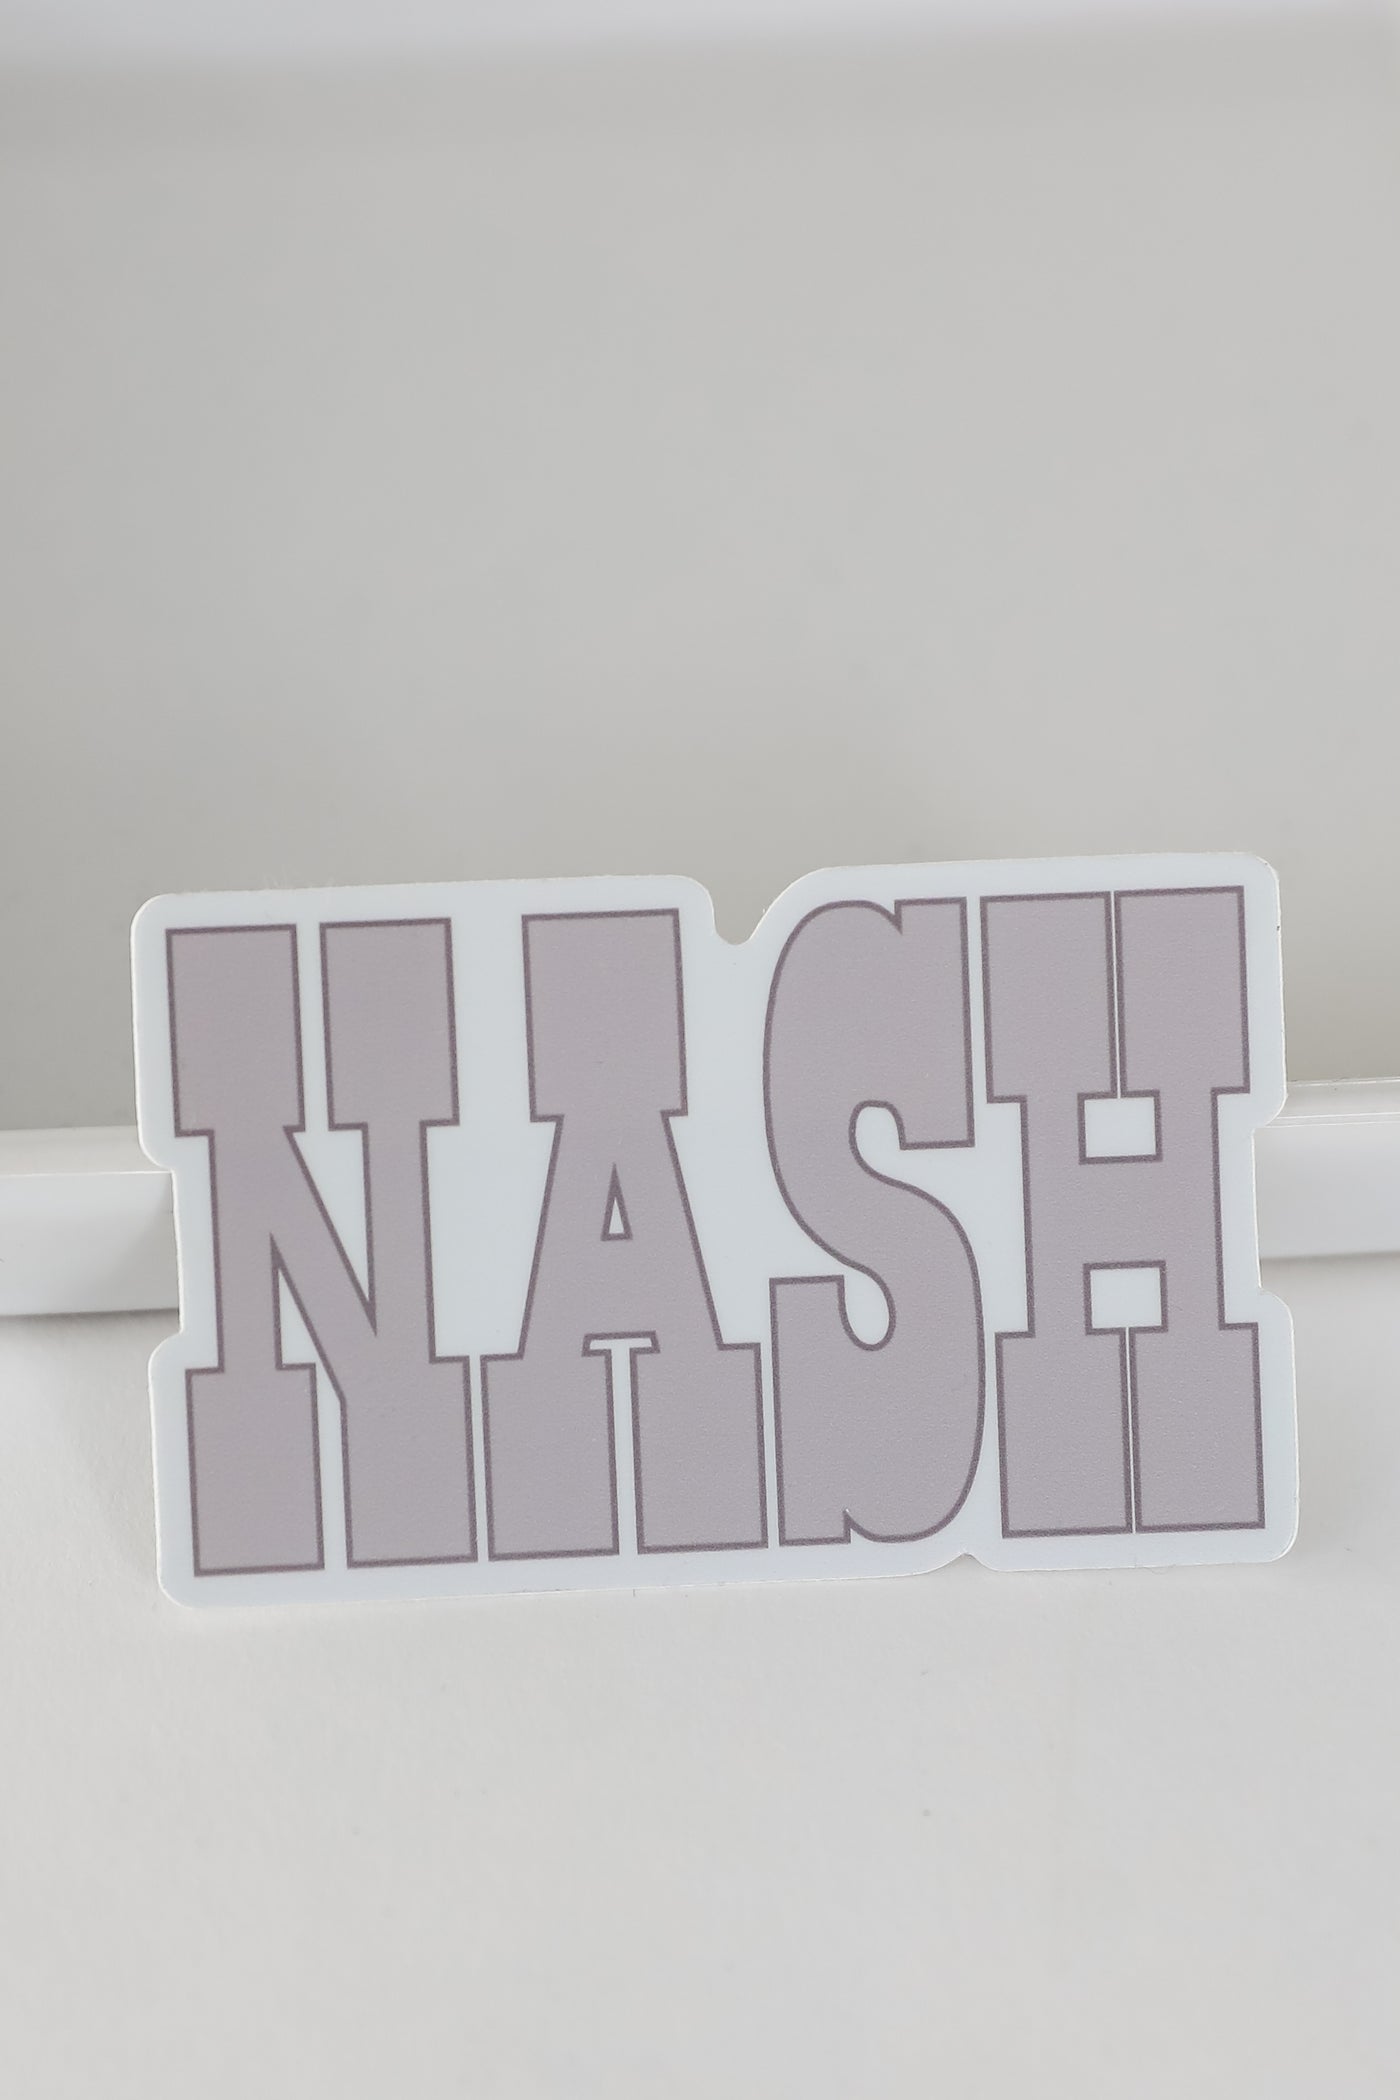 Nash Sticker from dress up